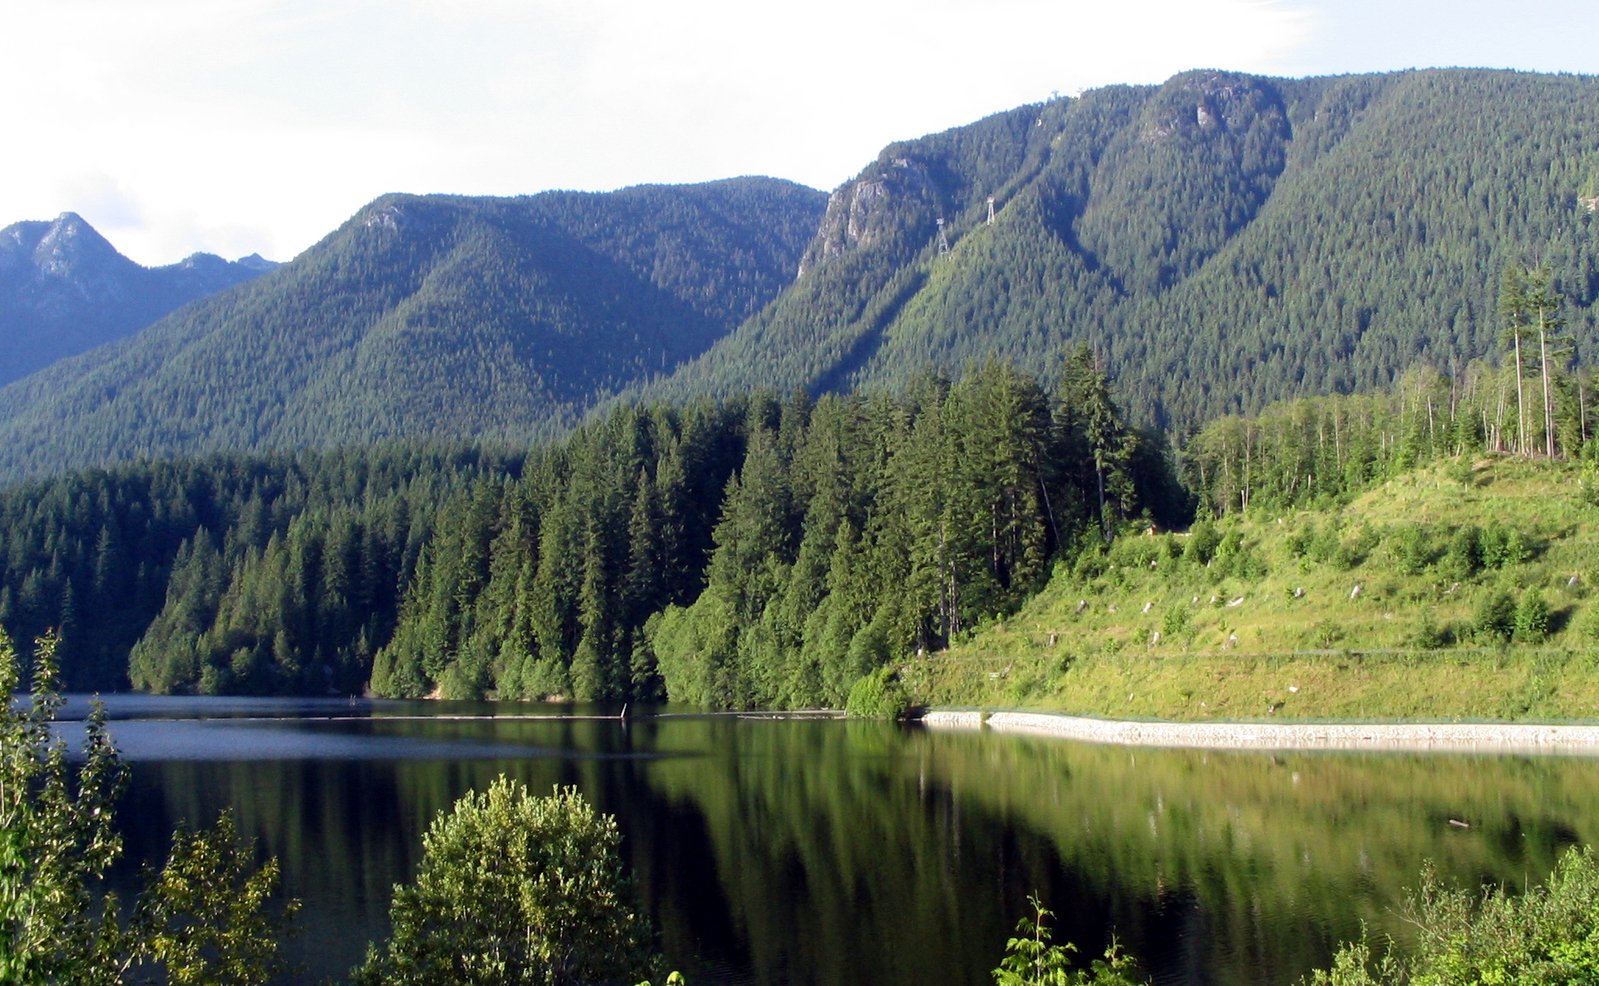 a mountain range with pine trees near a lake